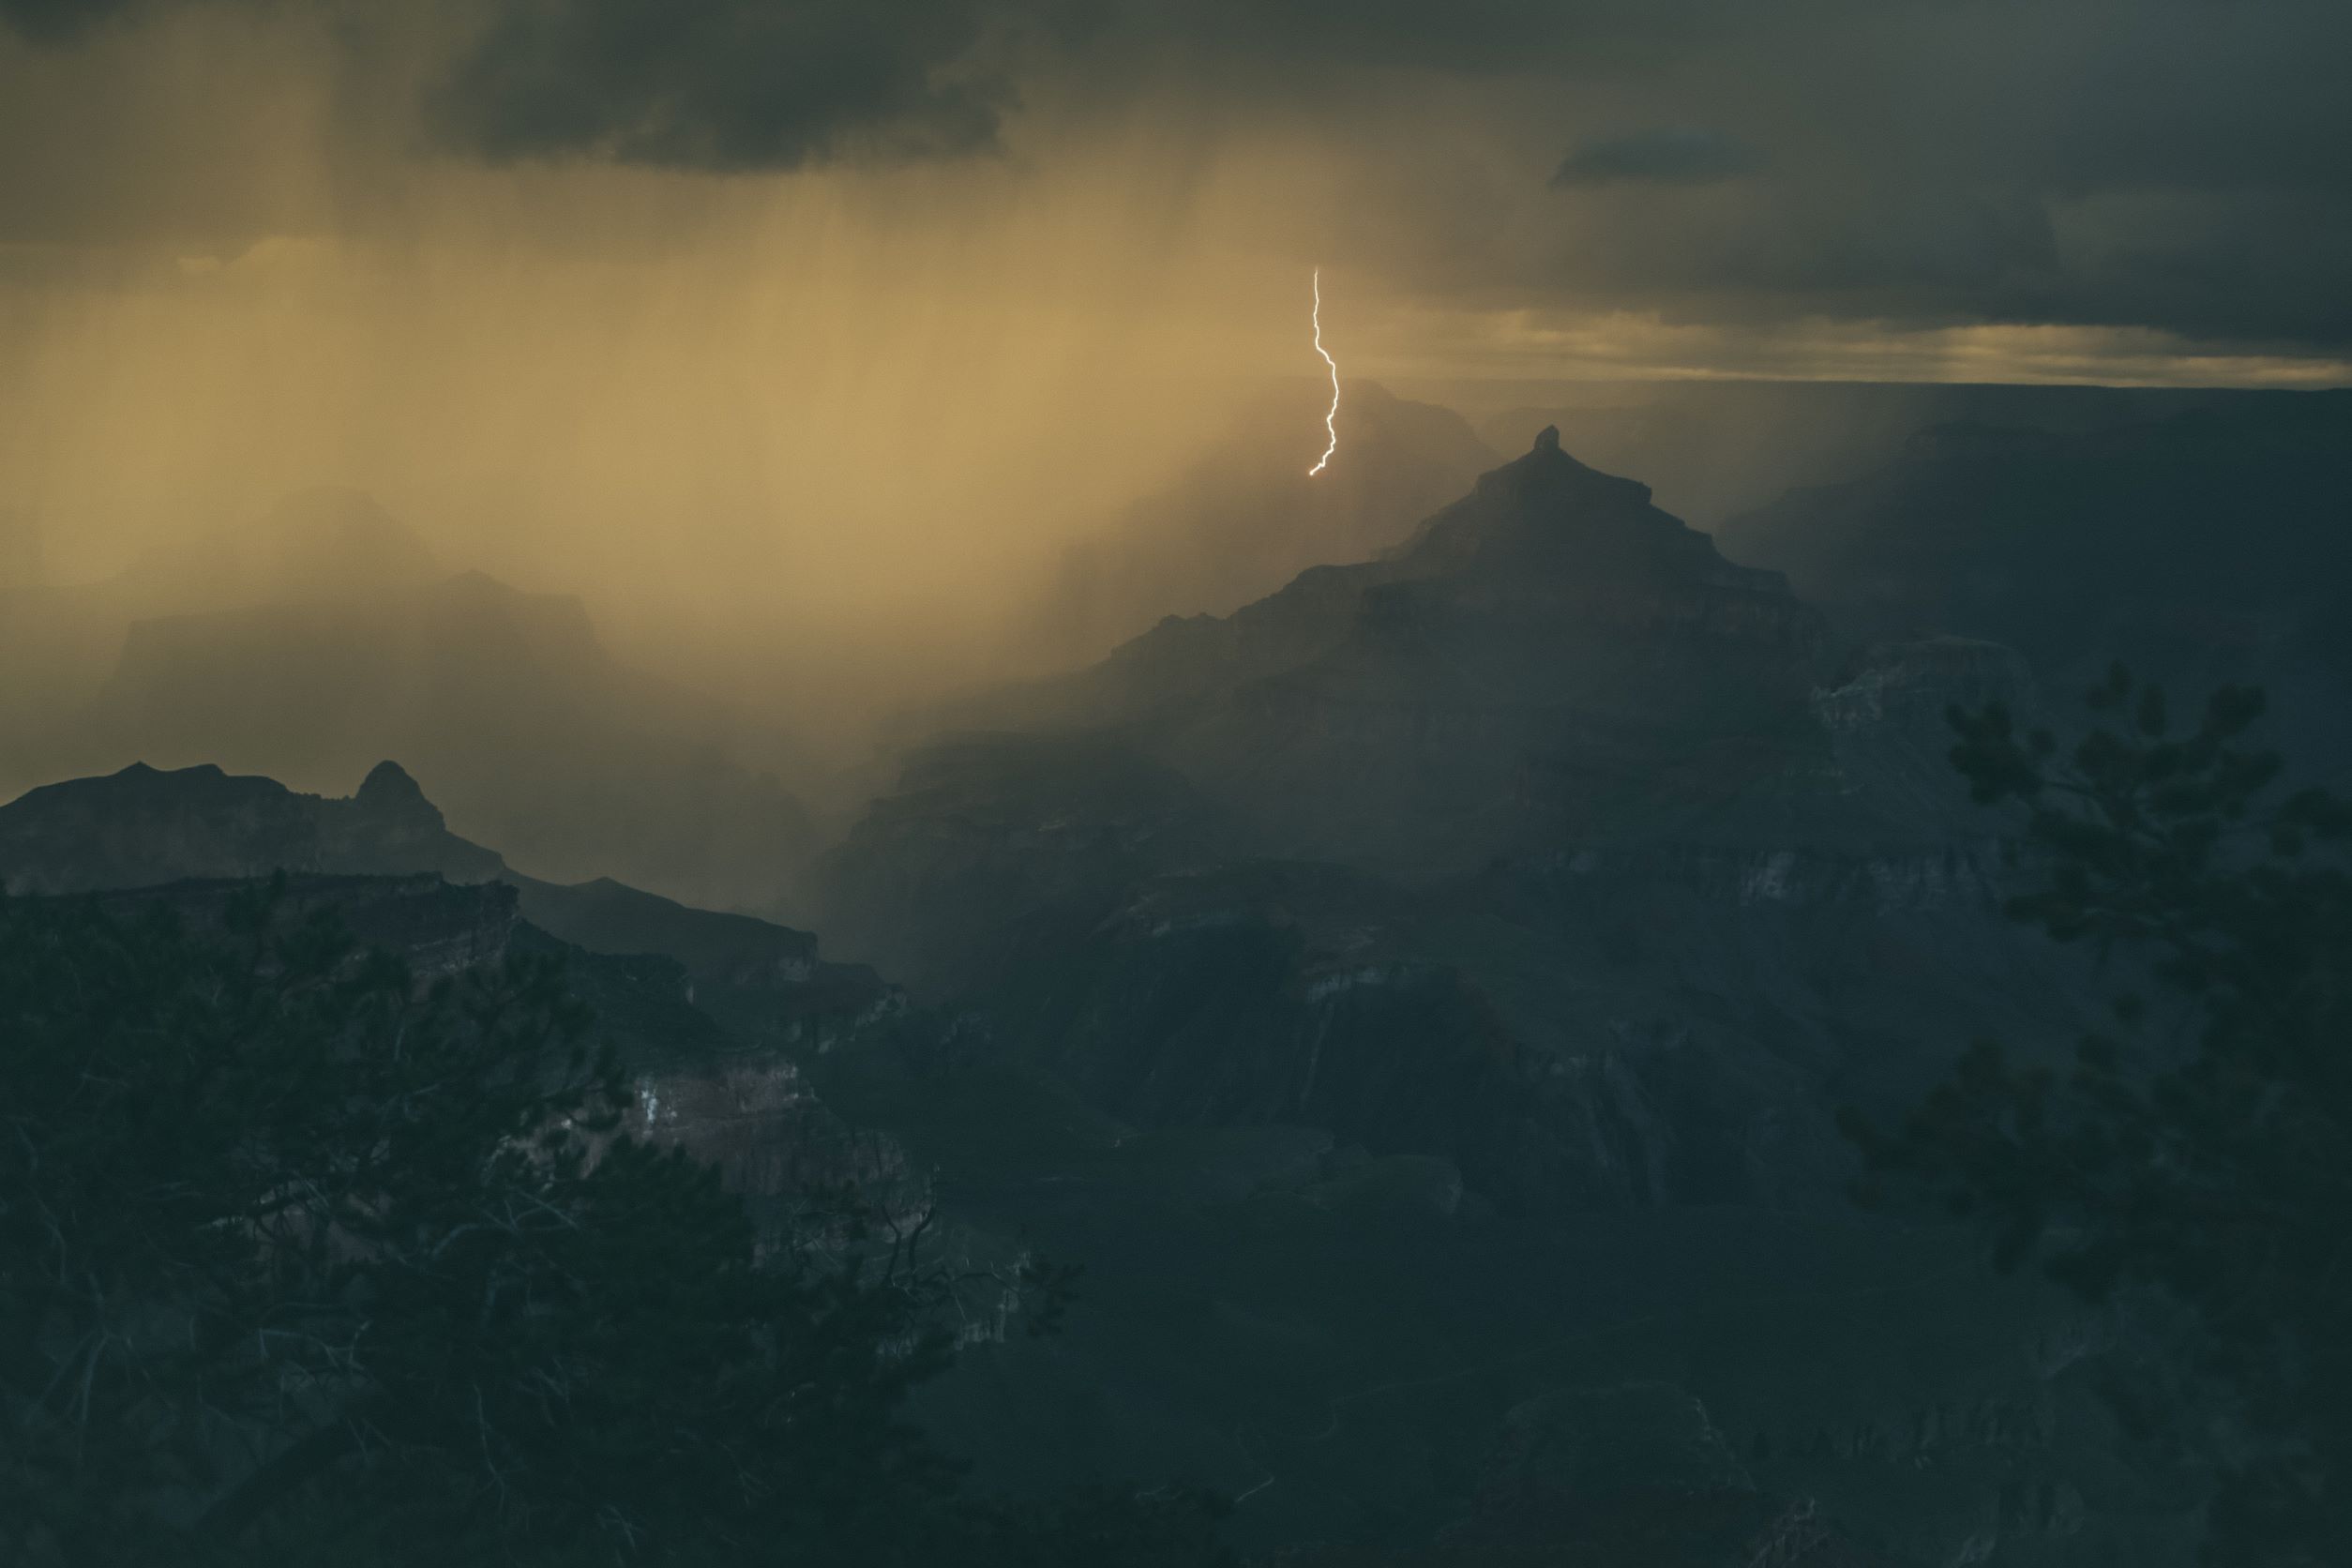 Lightning striking remote mountain top - Image by Tim Trad from Unsplash